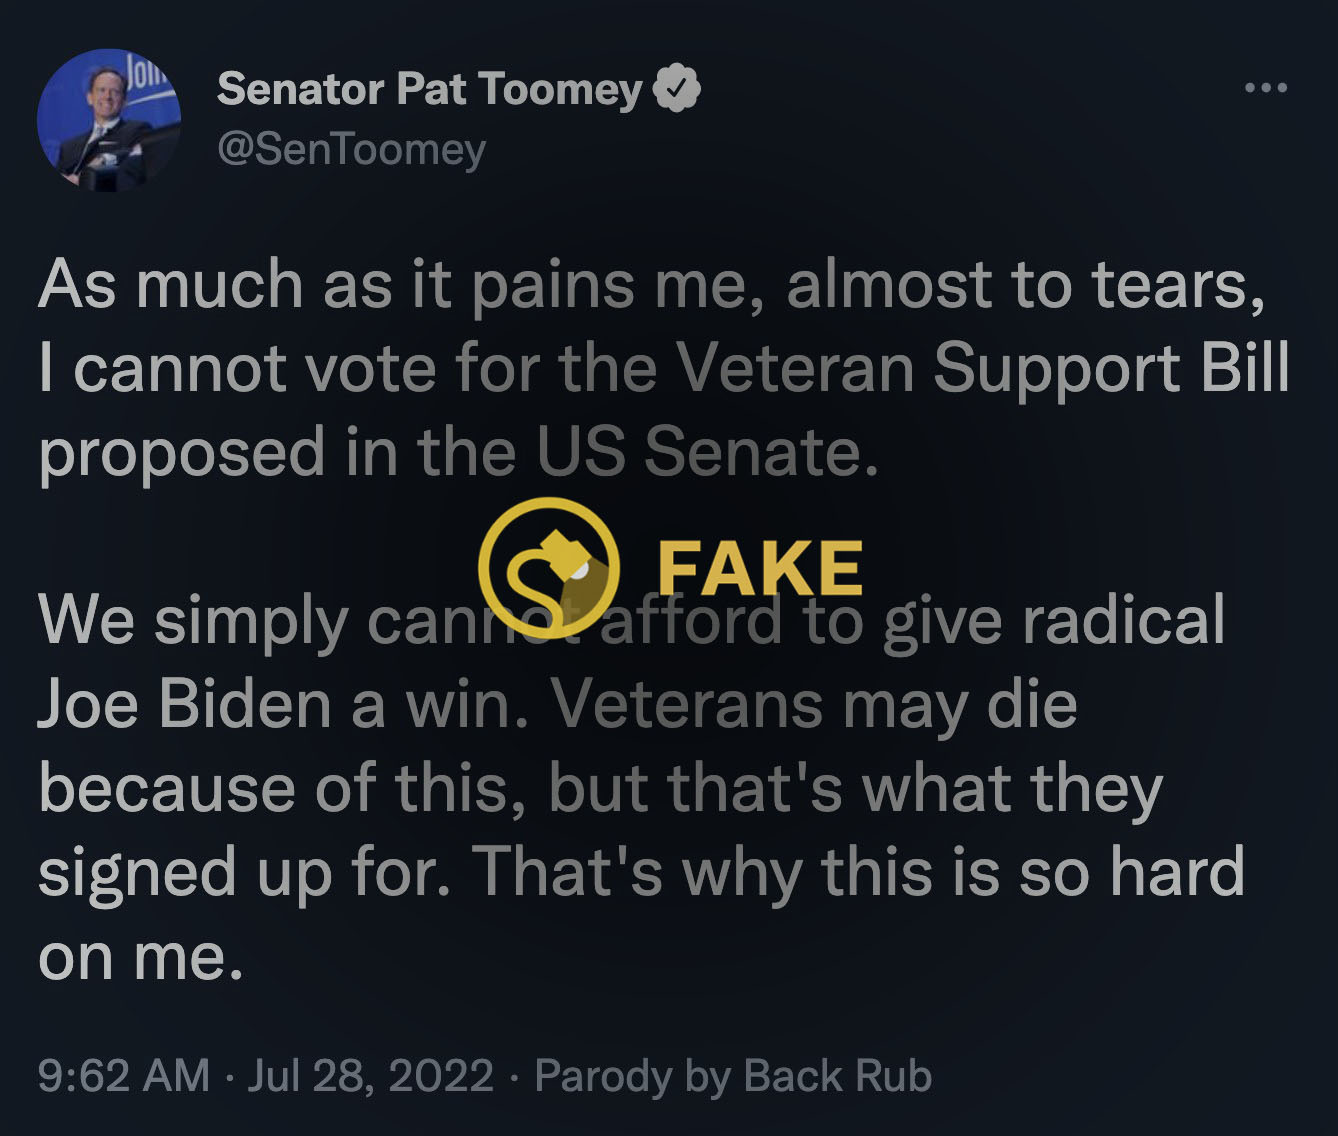 Pat Toomey did not tweet of a veteran support bill, 